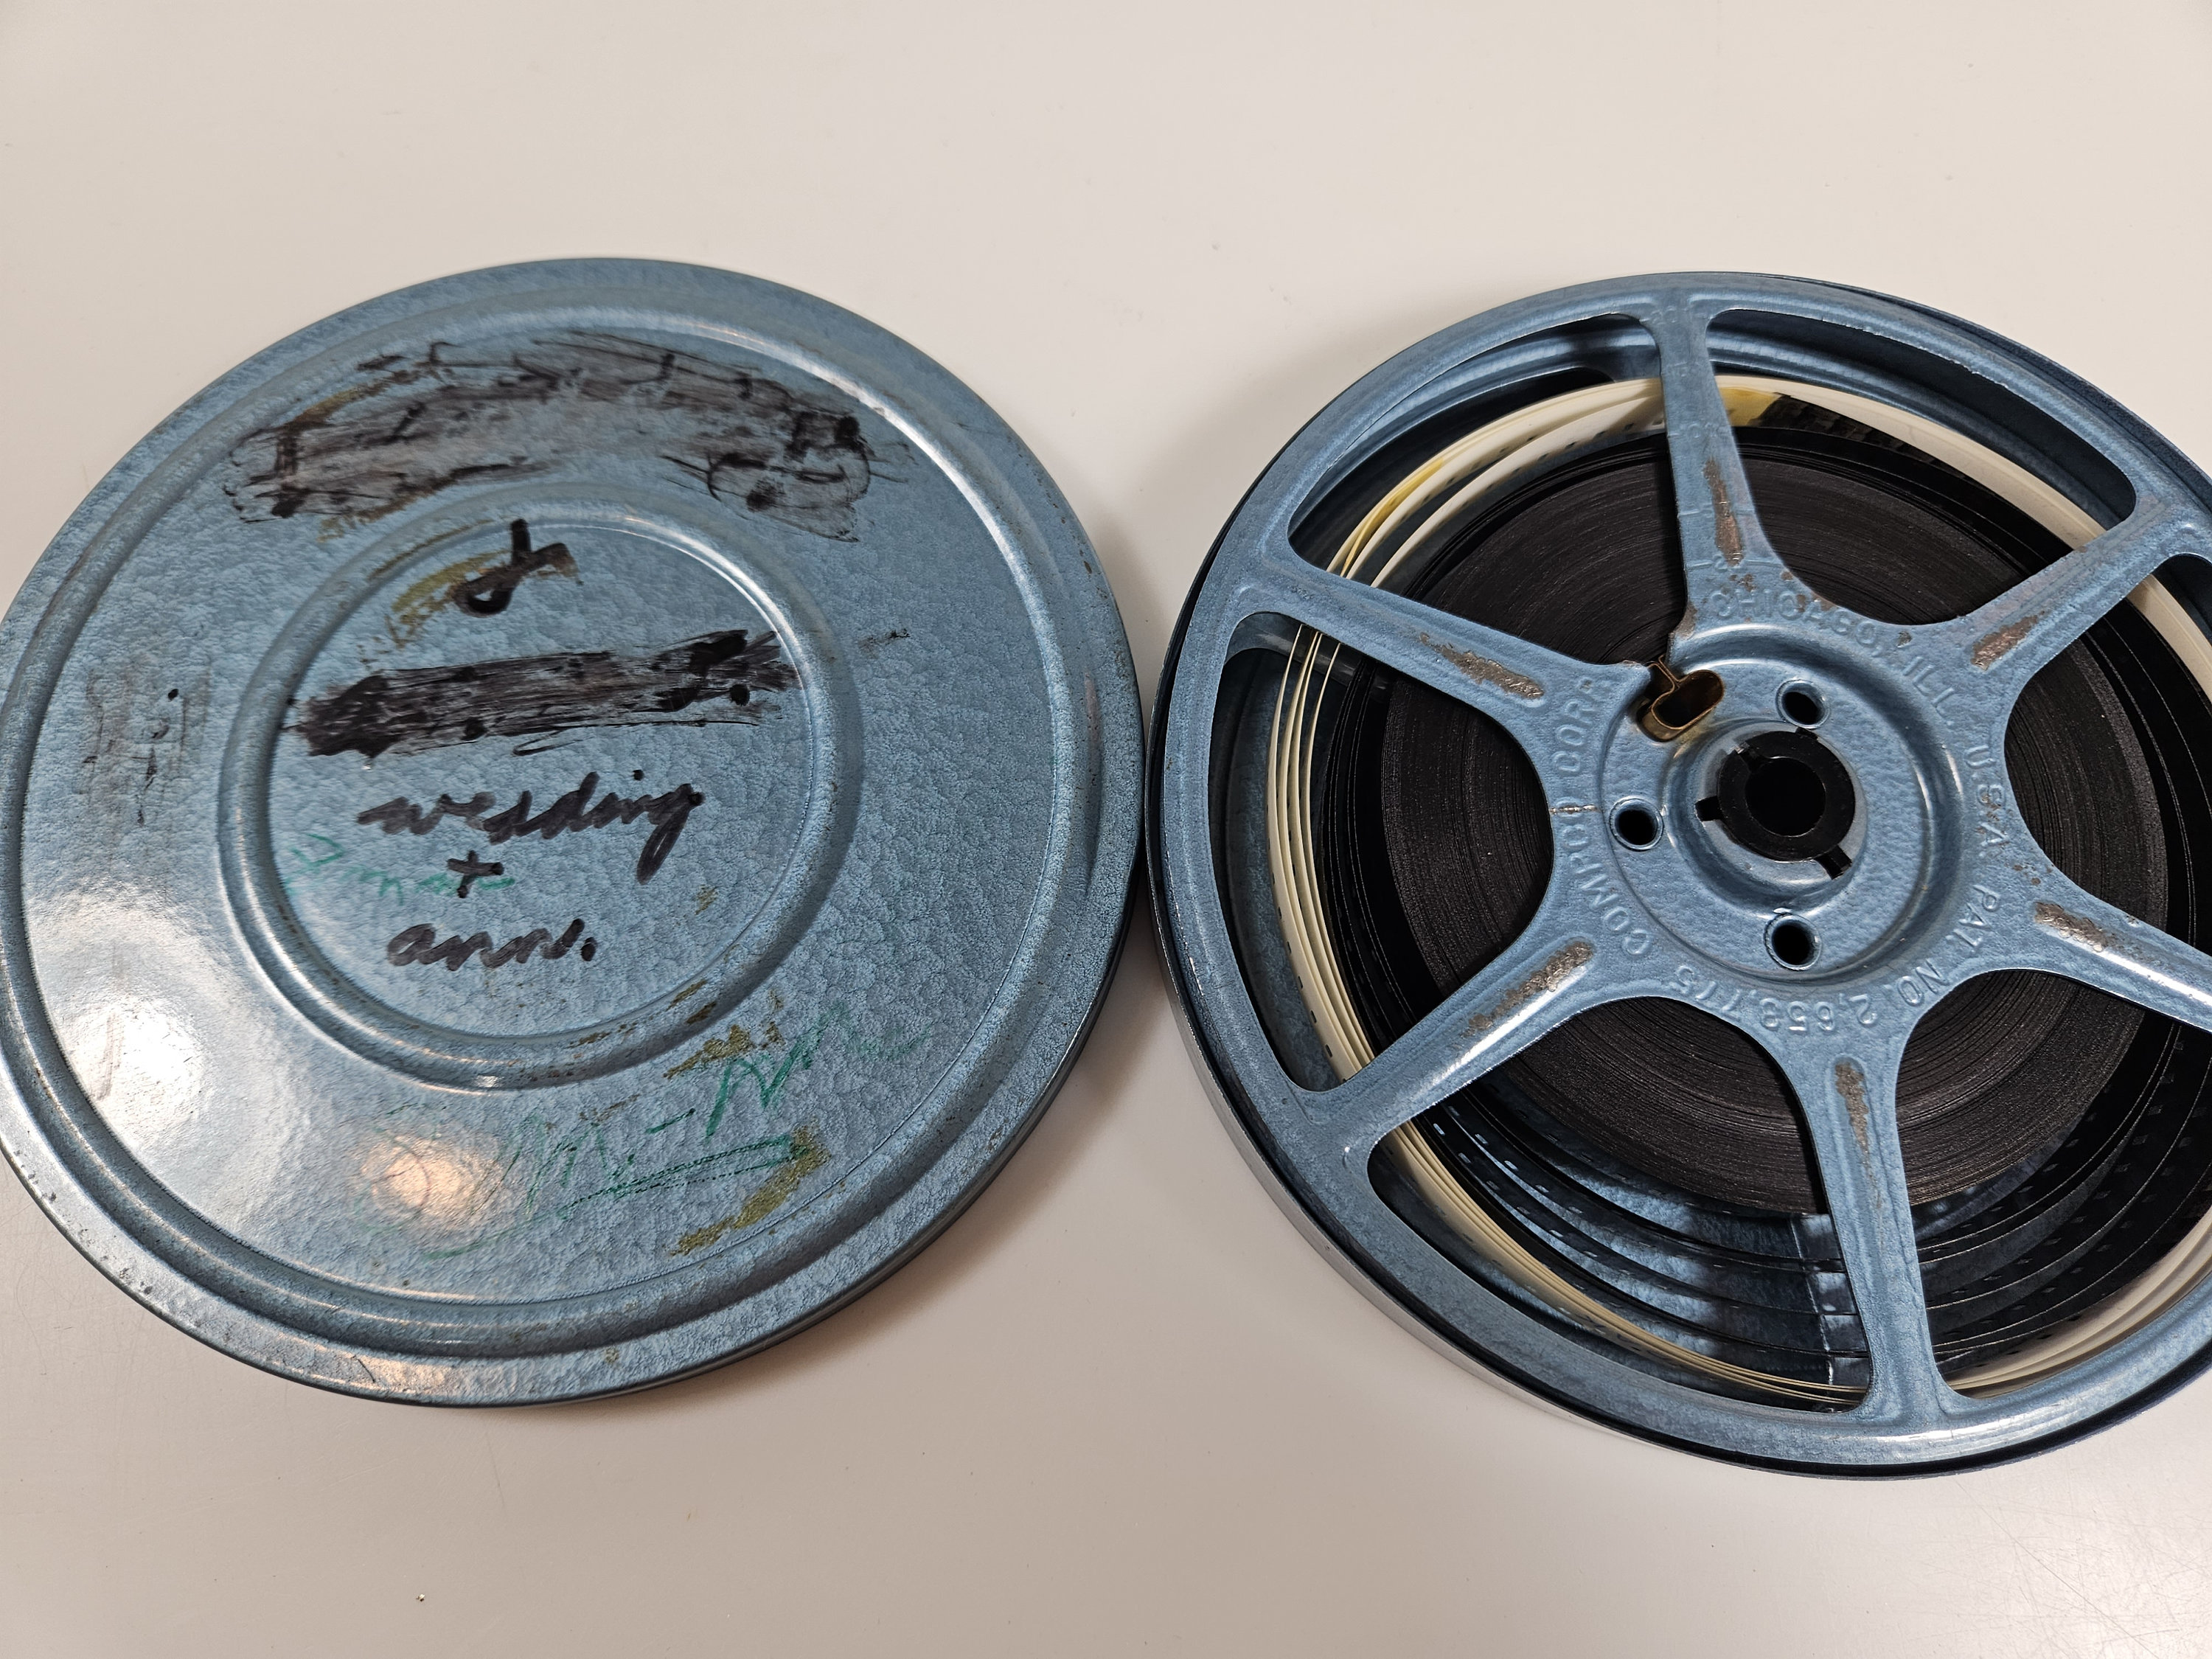 Vintage collection 8 mm cinema film reel. Retro design colorful